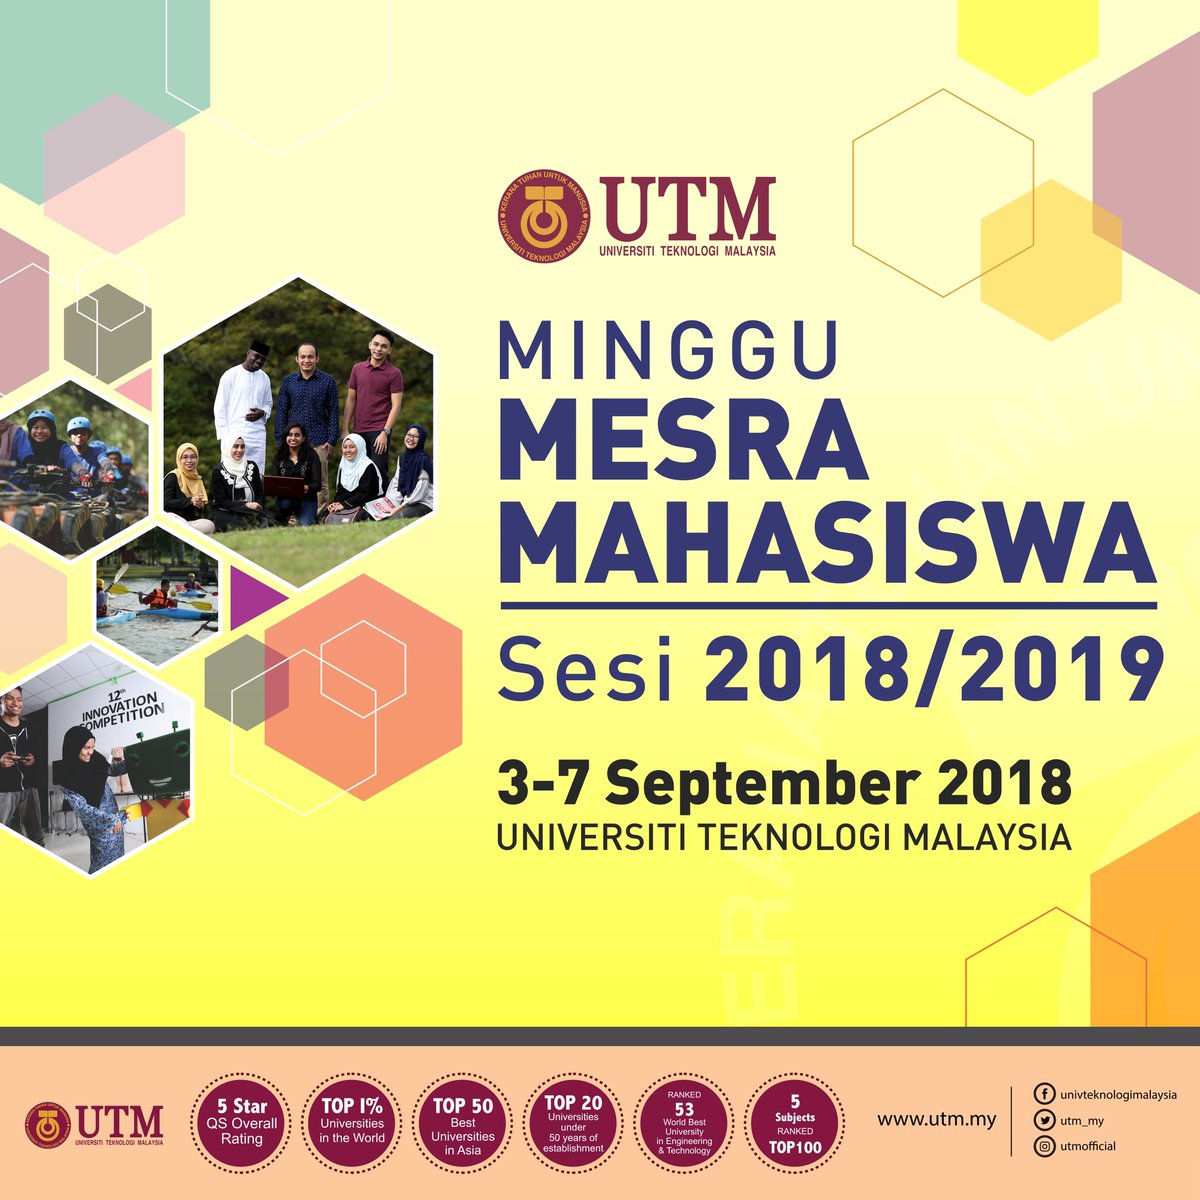 Minggu Mesra Mahasiswa UTM 
Bermula 3 Sept 2018
#soon #newstudents #orientationweek